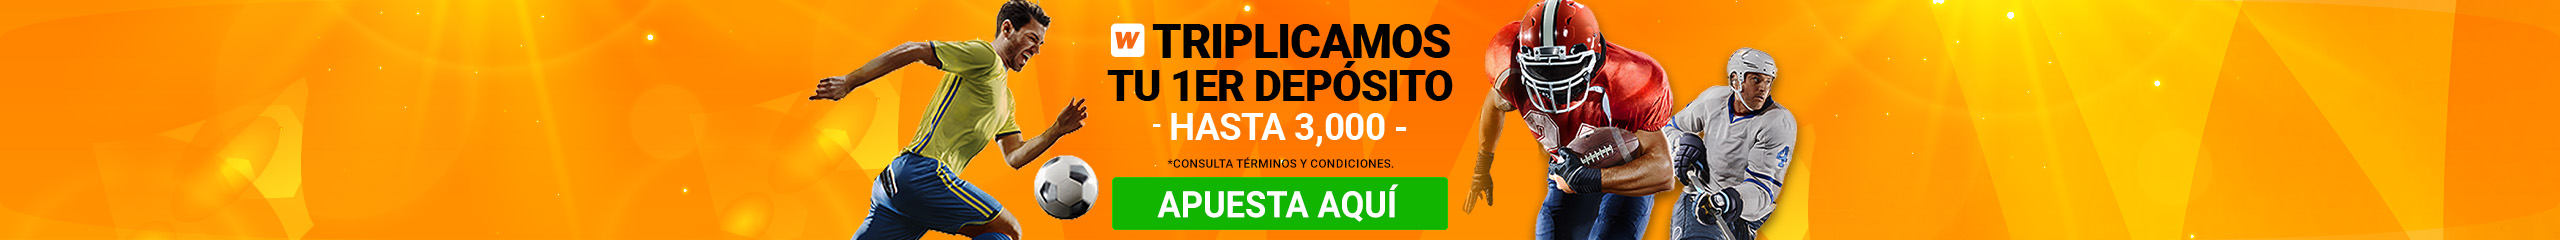 Triplica tu 1er depósito, solo en Winner.mx